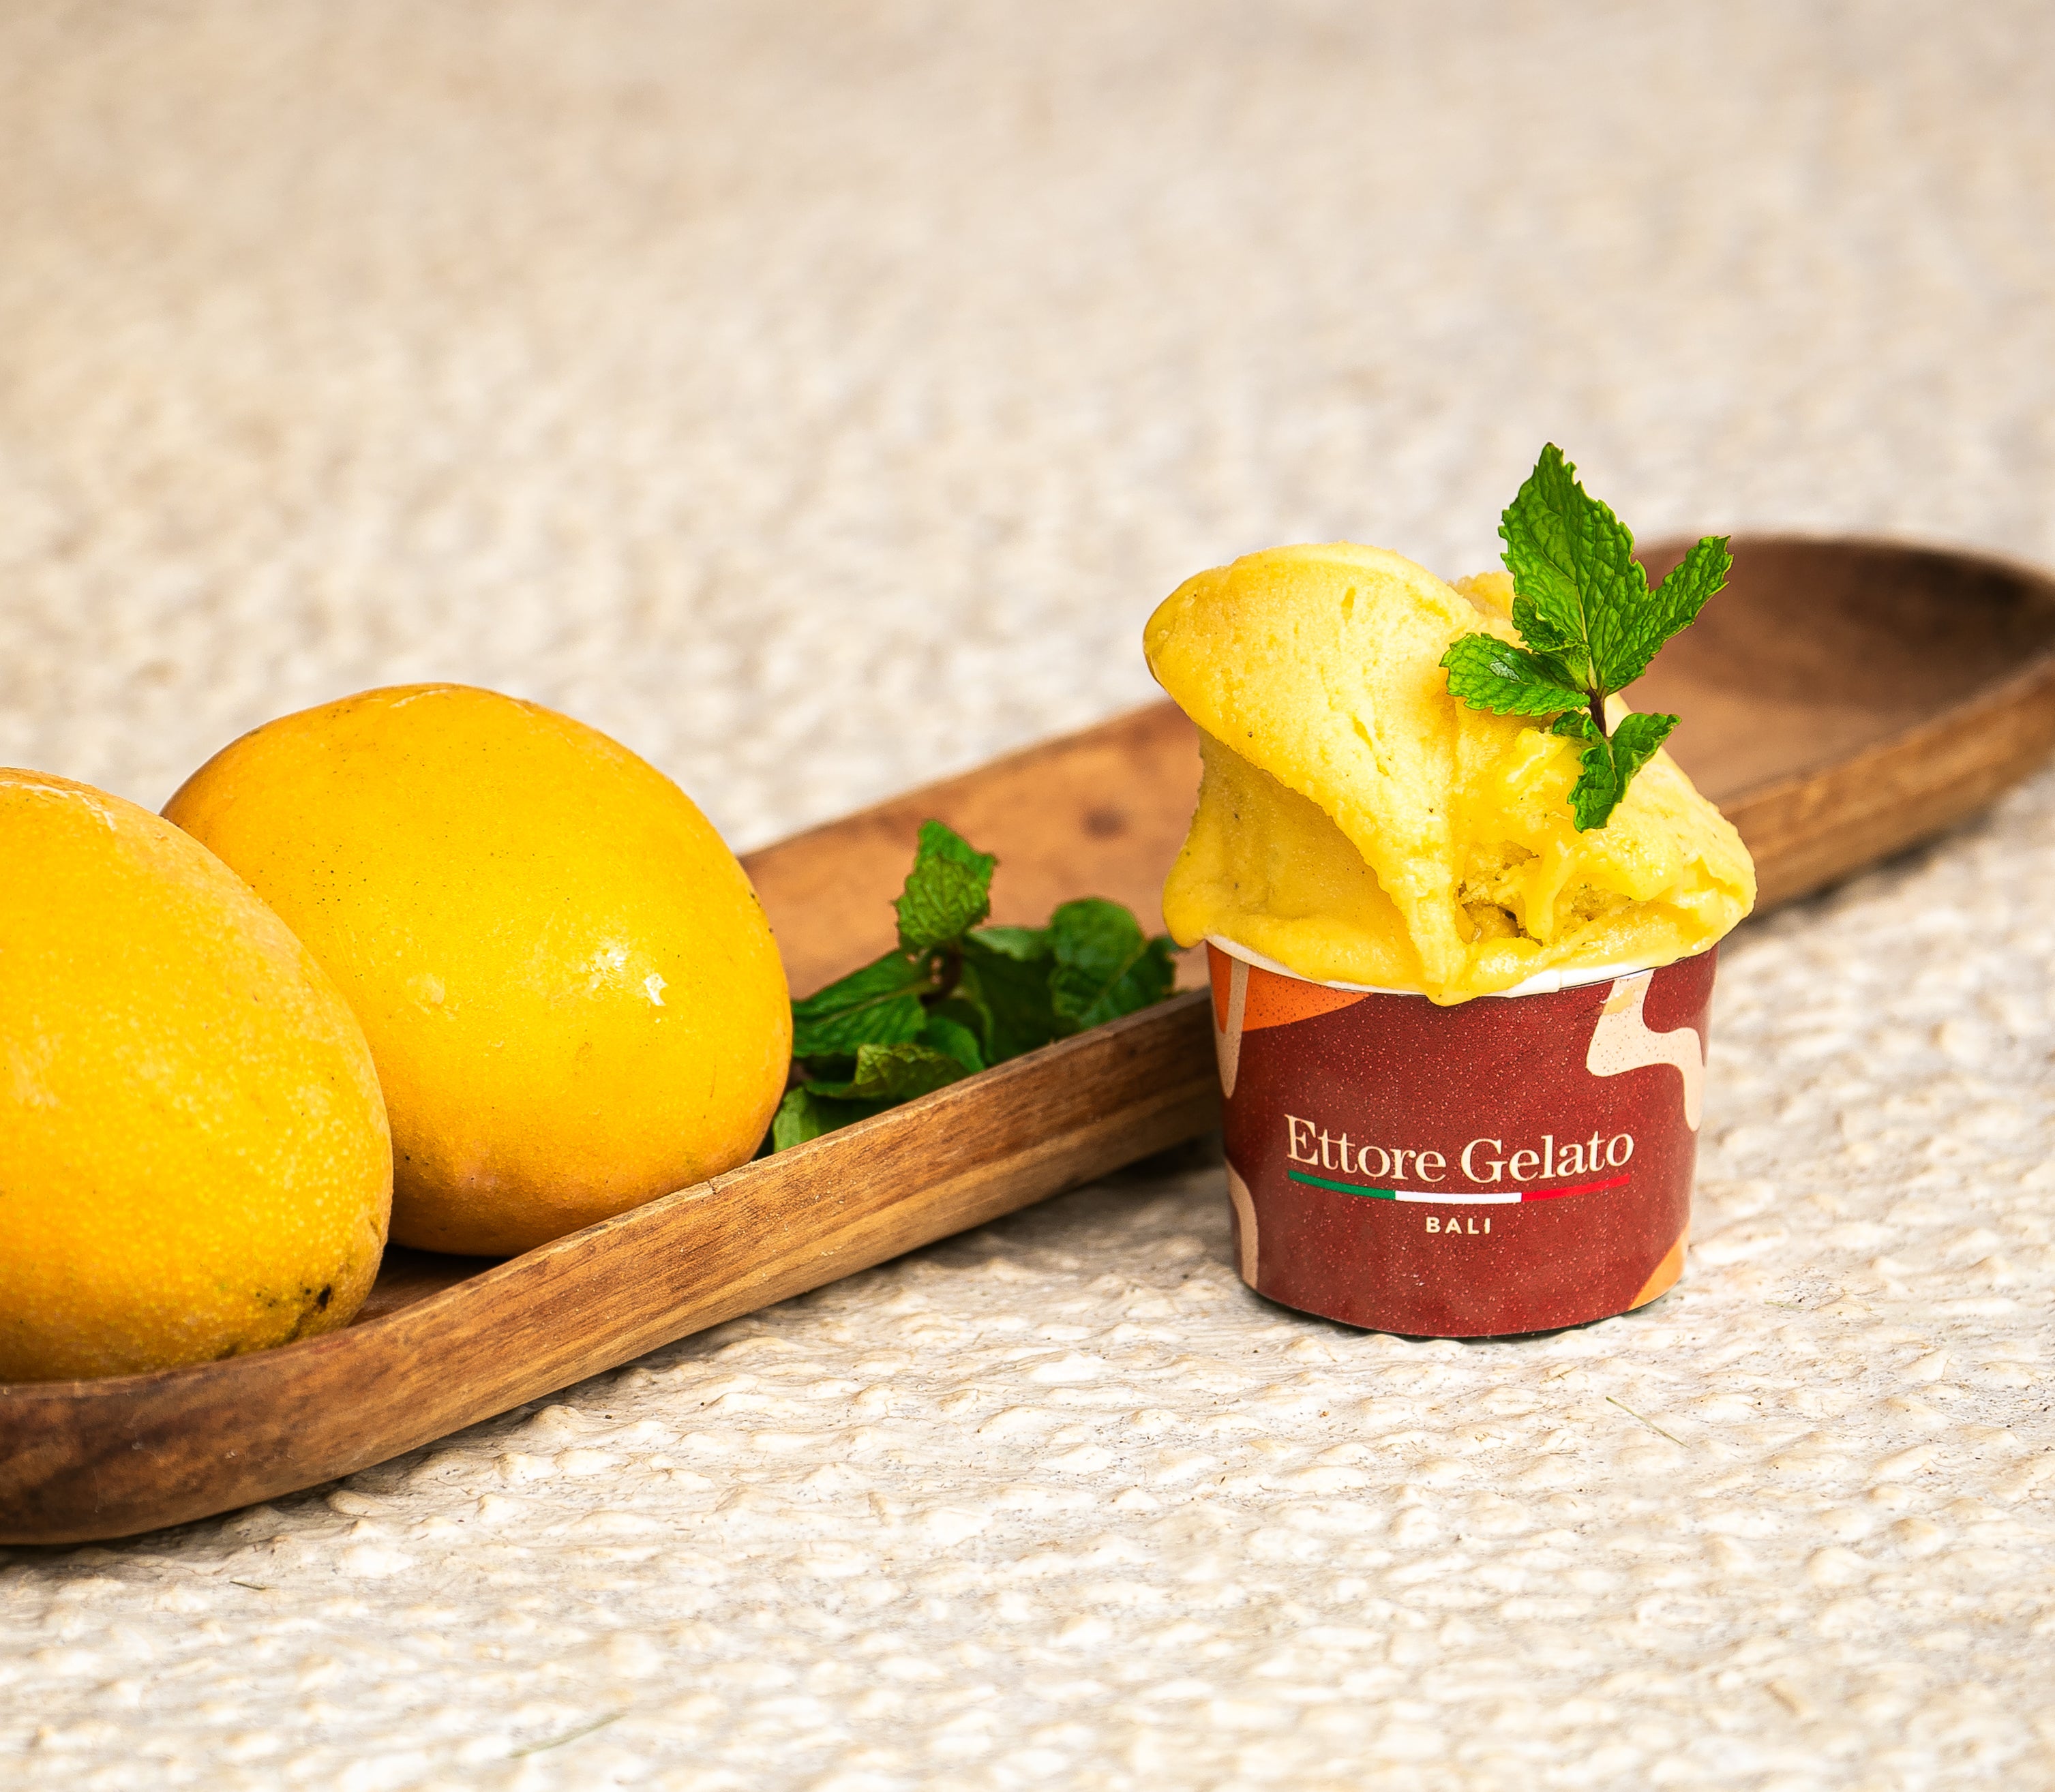 Ettore Gelato - Mango mint e passion fruit sorbet (gelato) cup / Each